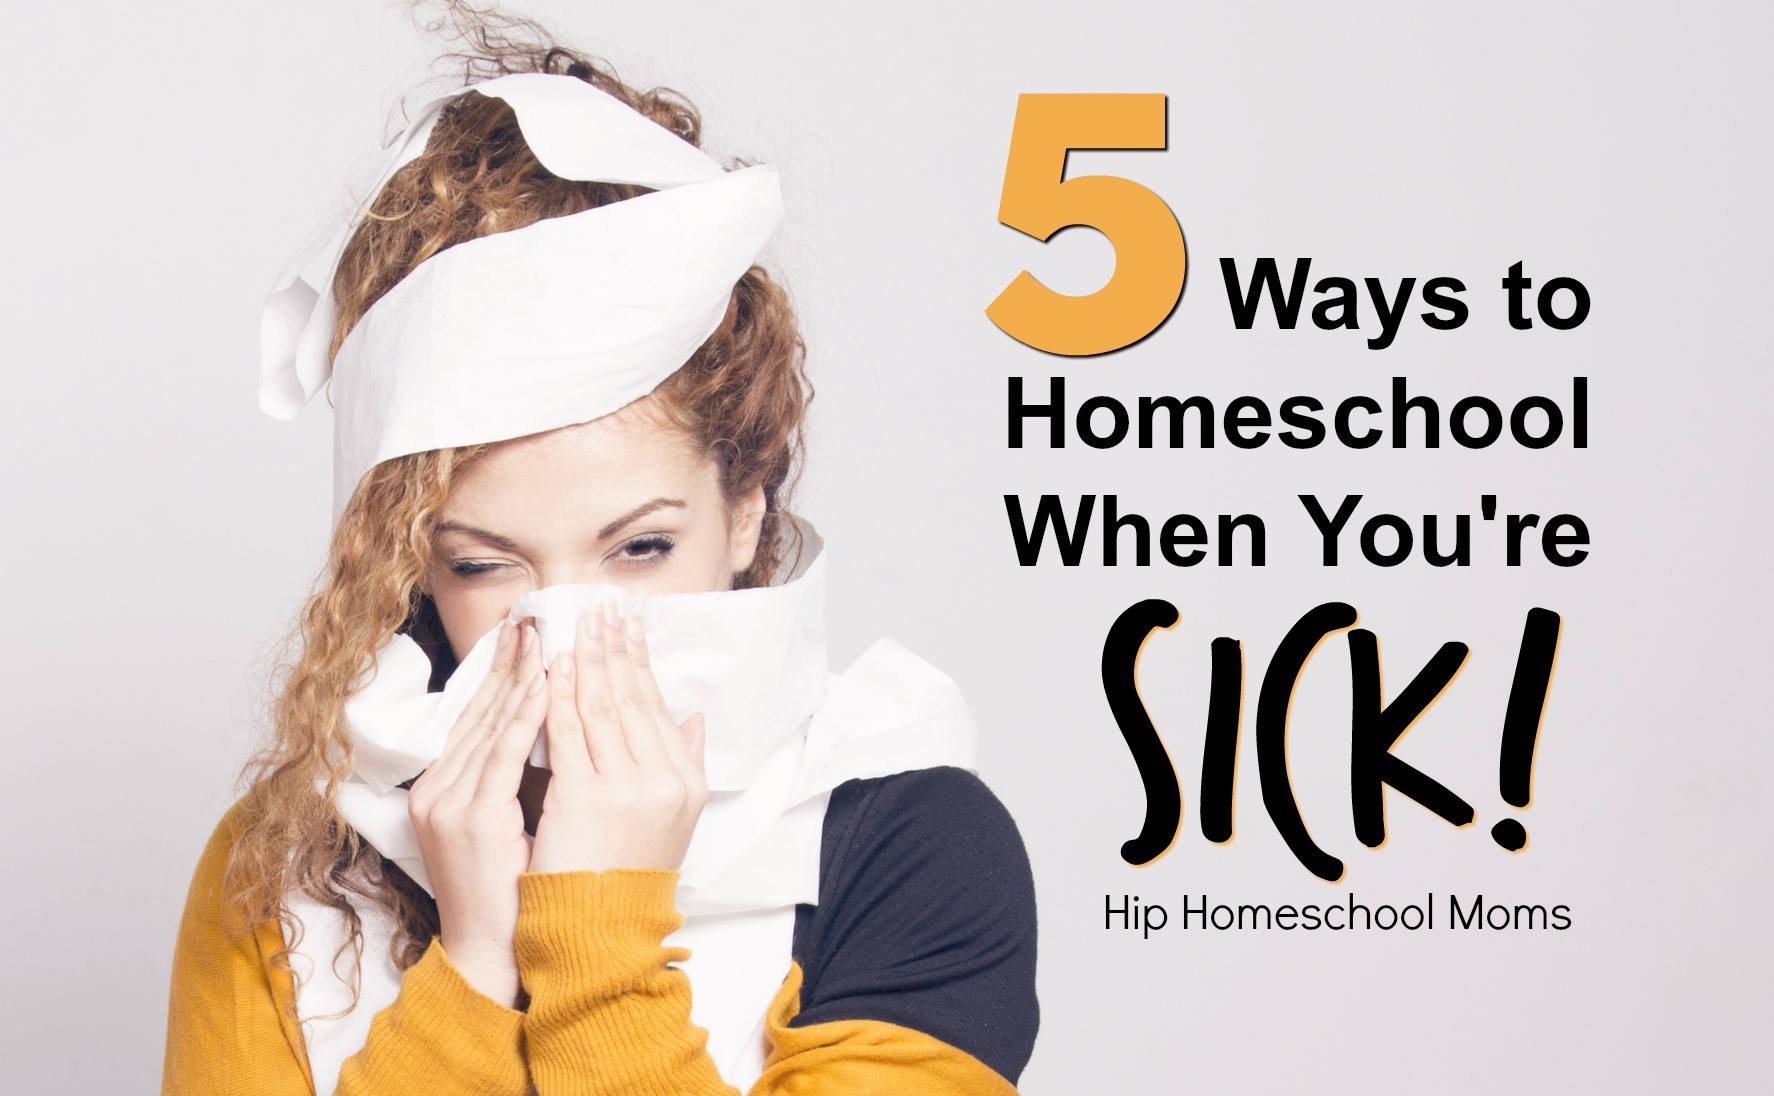 5 Ways to Homeschool When You’re Sick